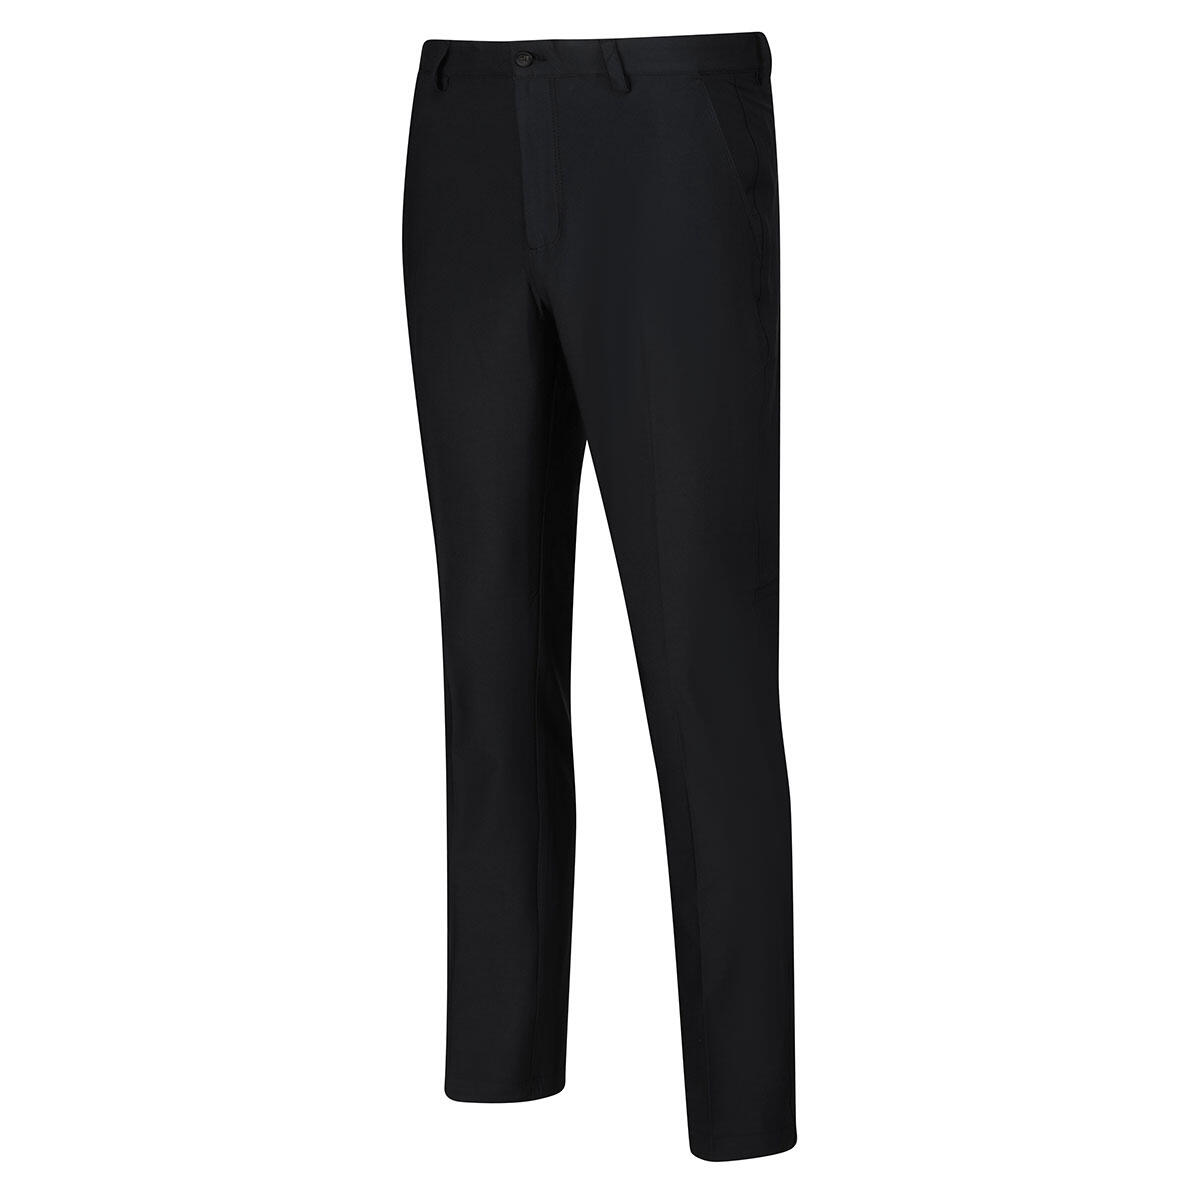 Greg Norman Golf Pants Mens 40 Black Dress Trousers Pleated Regular 40x32  Adult | eBay